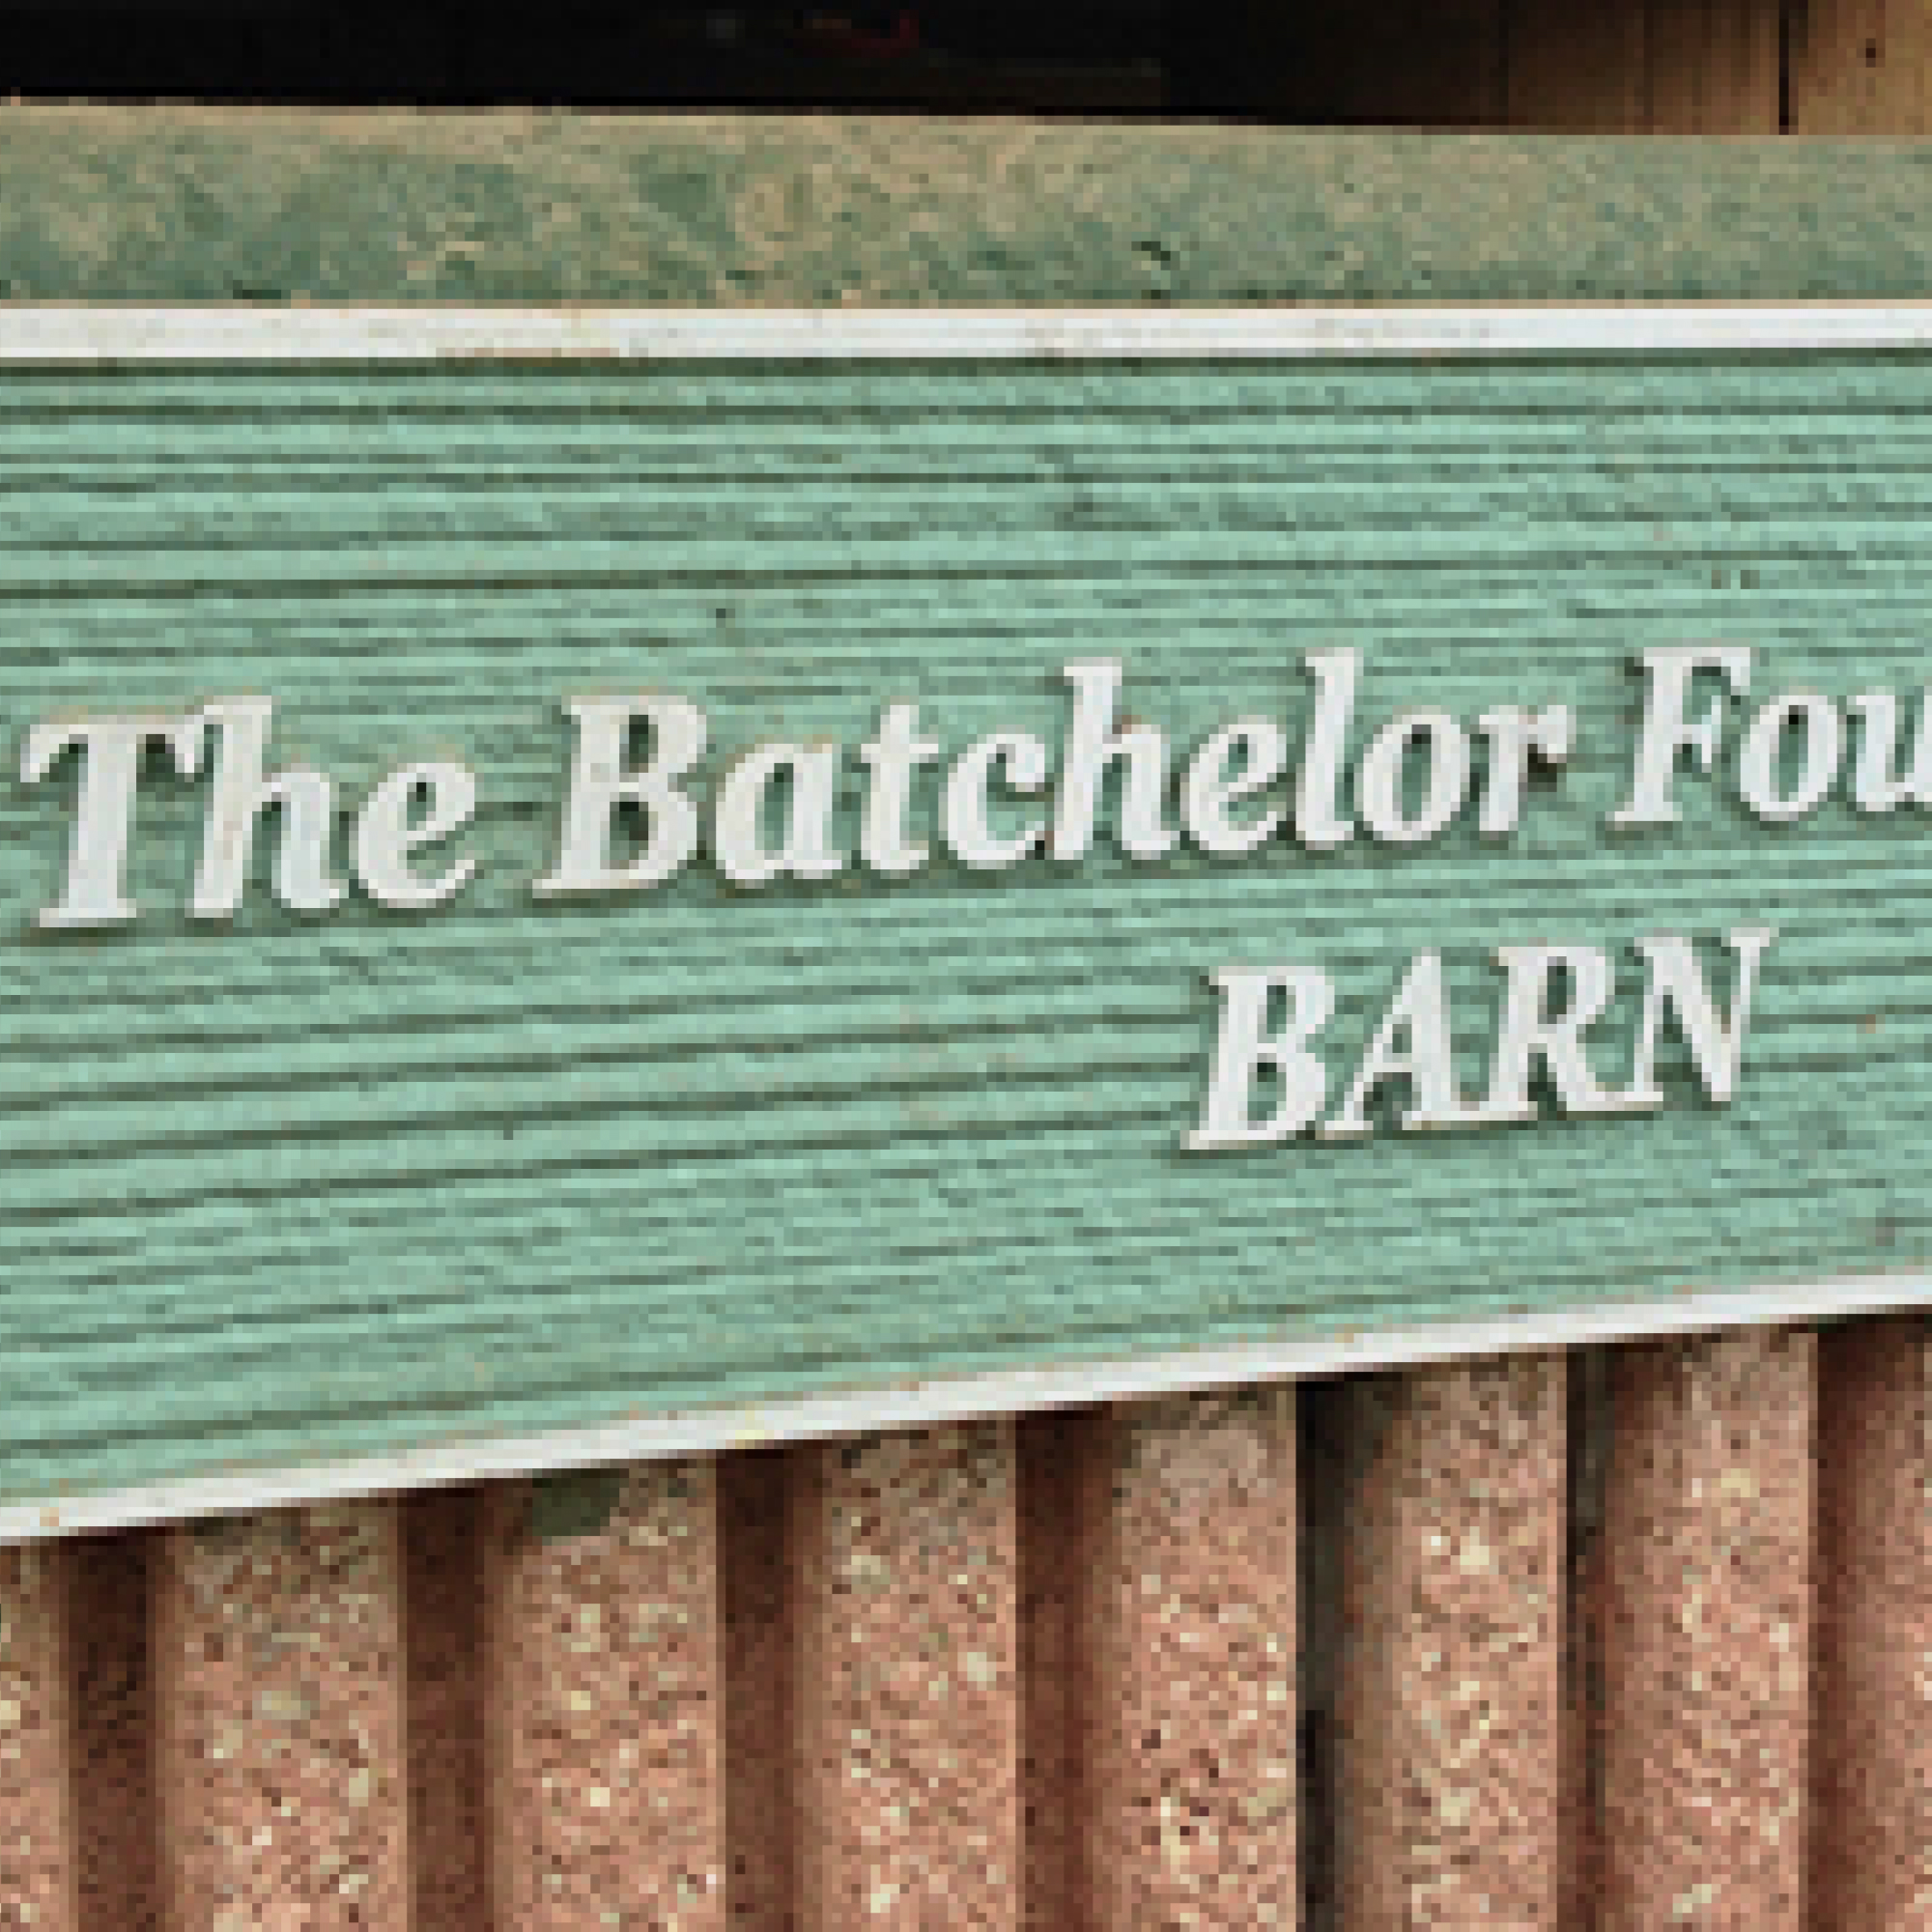 The Batchelor Foundation North Barn